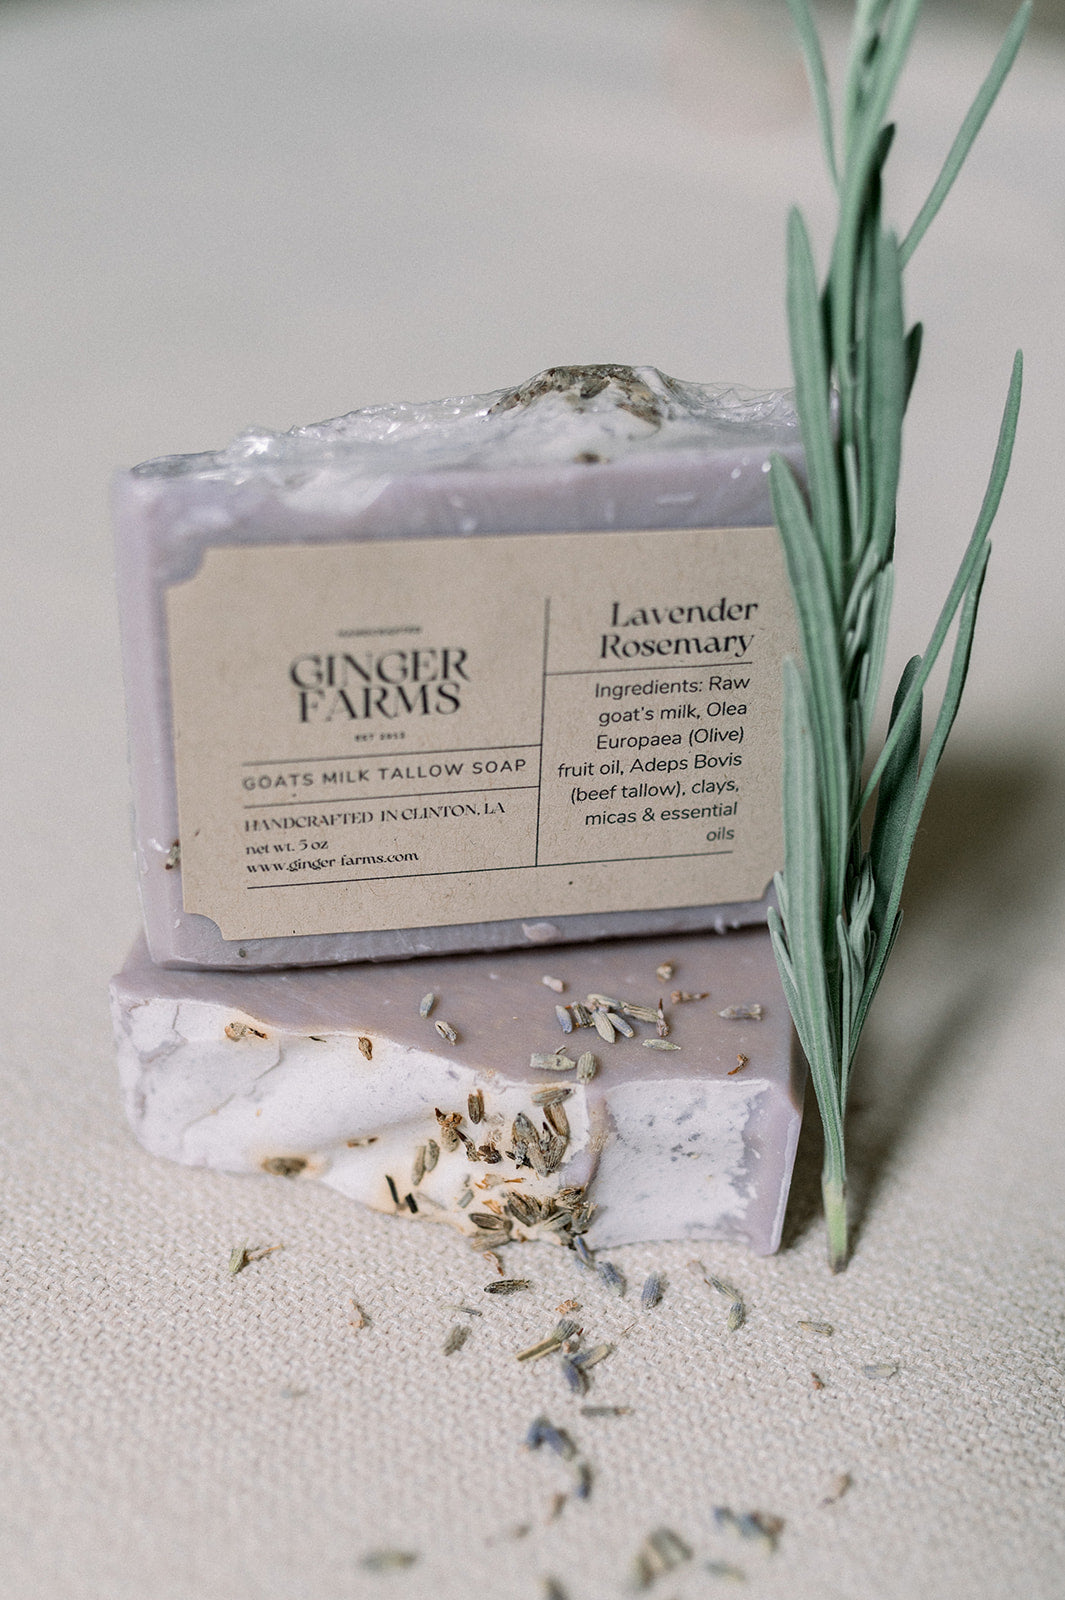 Lavender Rosemary soap